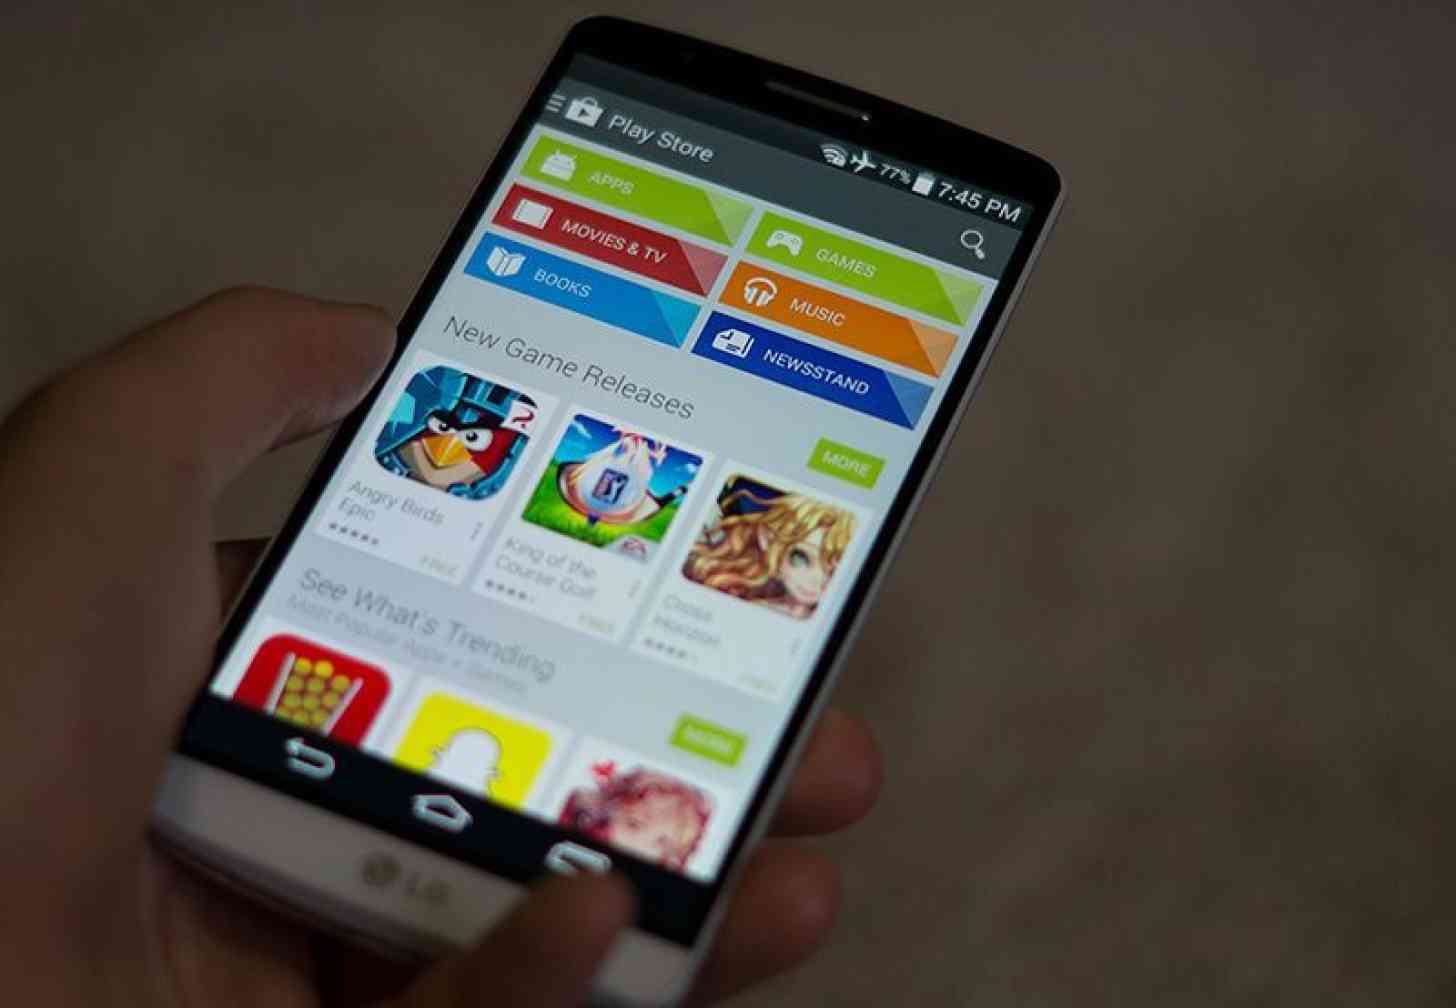 LG G3 Google Play app